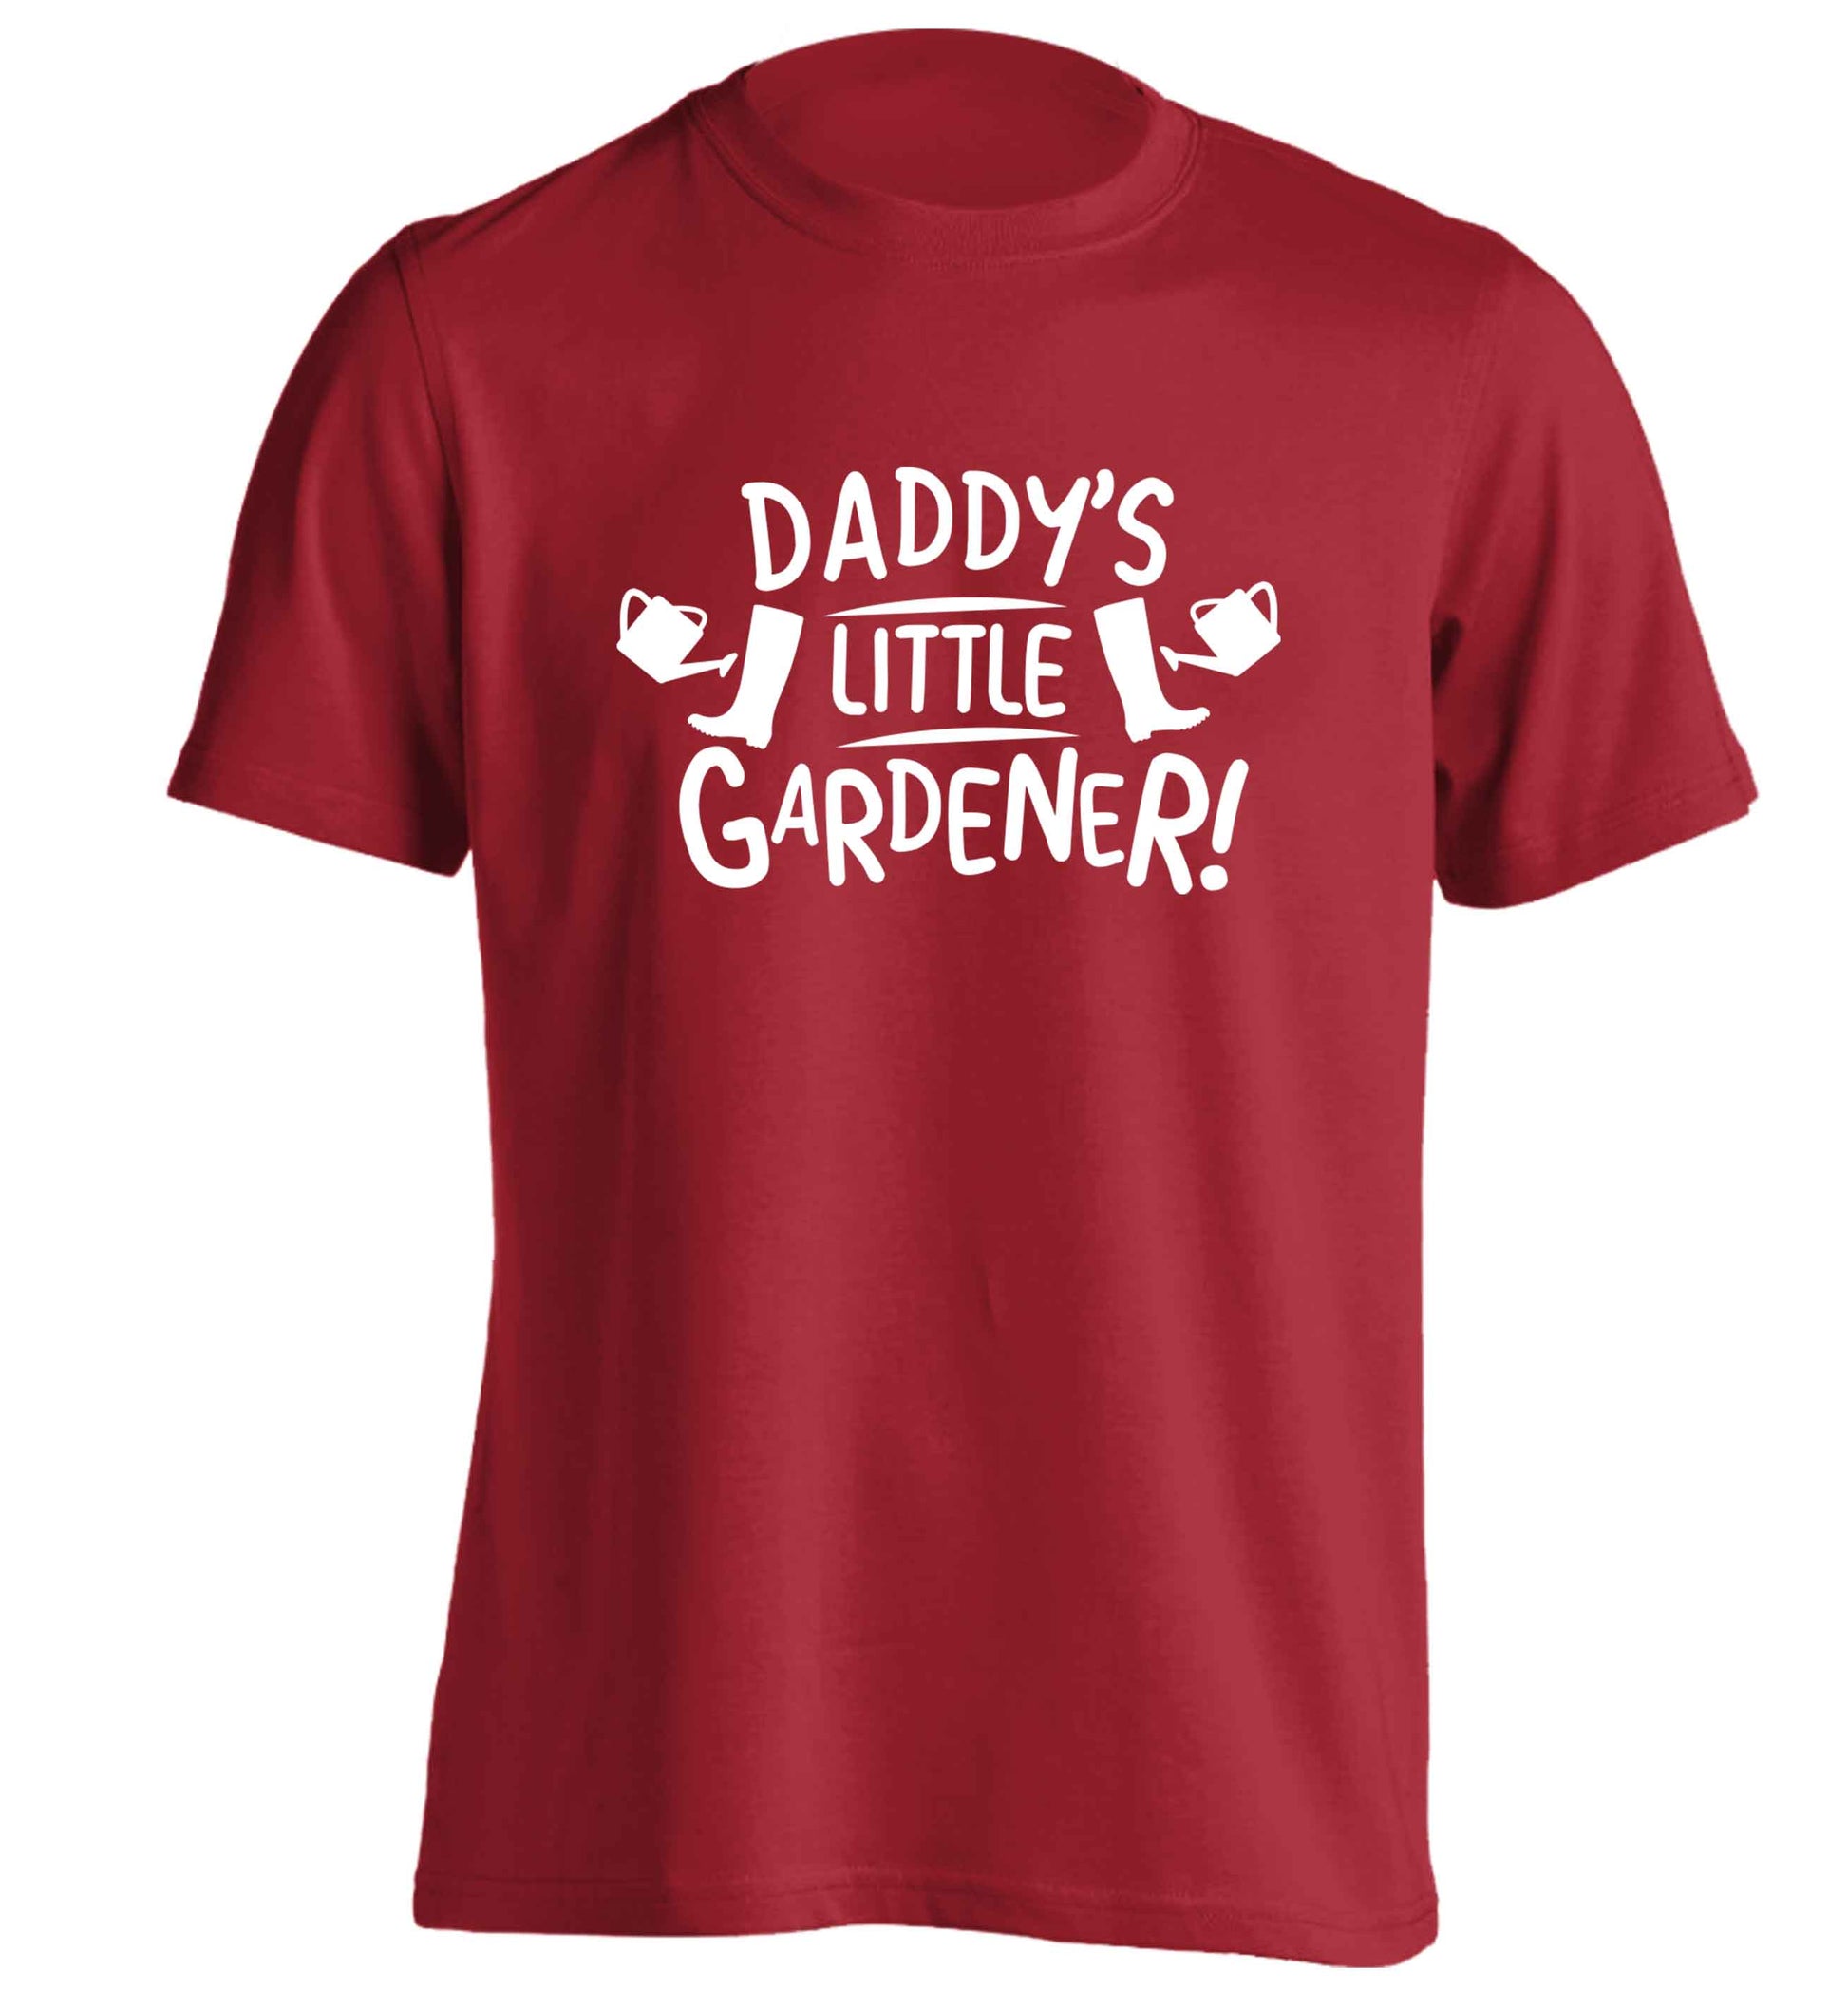 Daddy's little gardener adults unisex red Tshirt 2XL